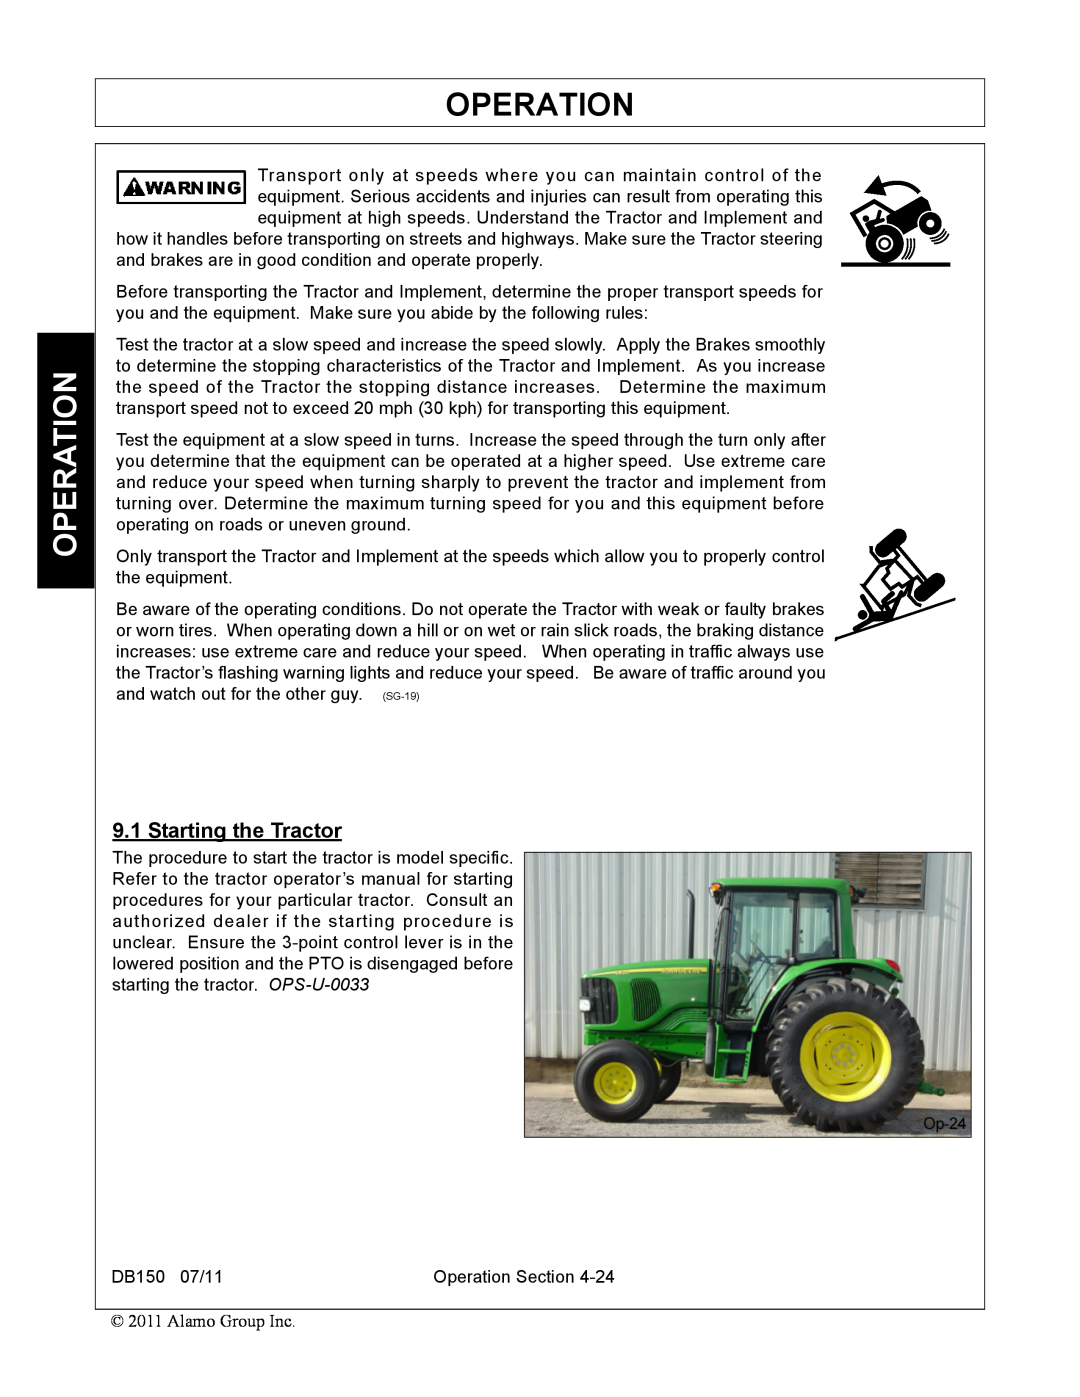 Rhino Mounts DB150 manual Operation, Starting the Tractor 